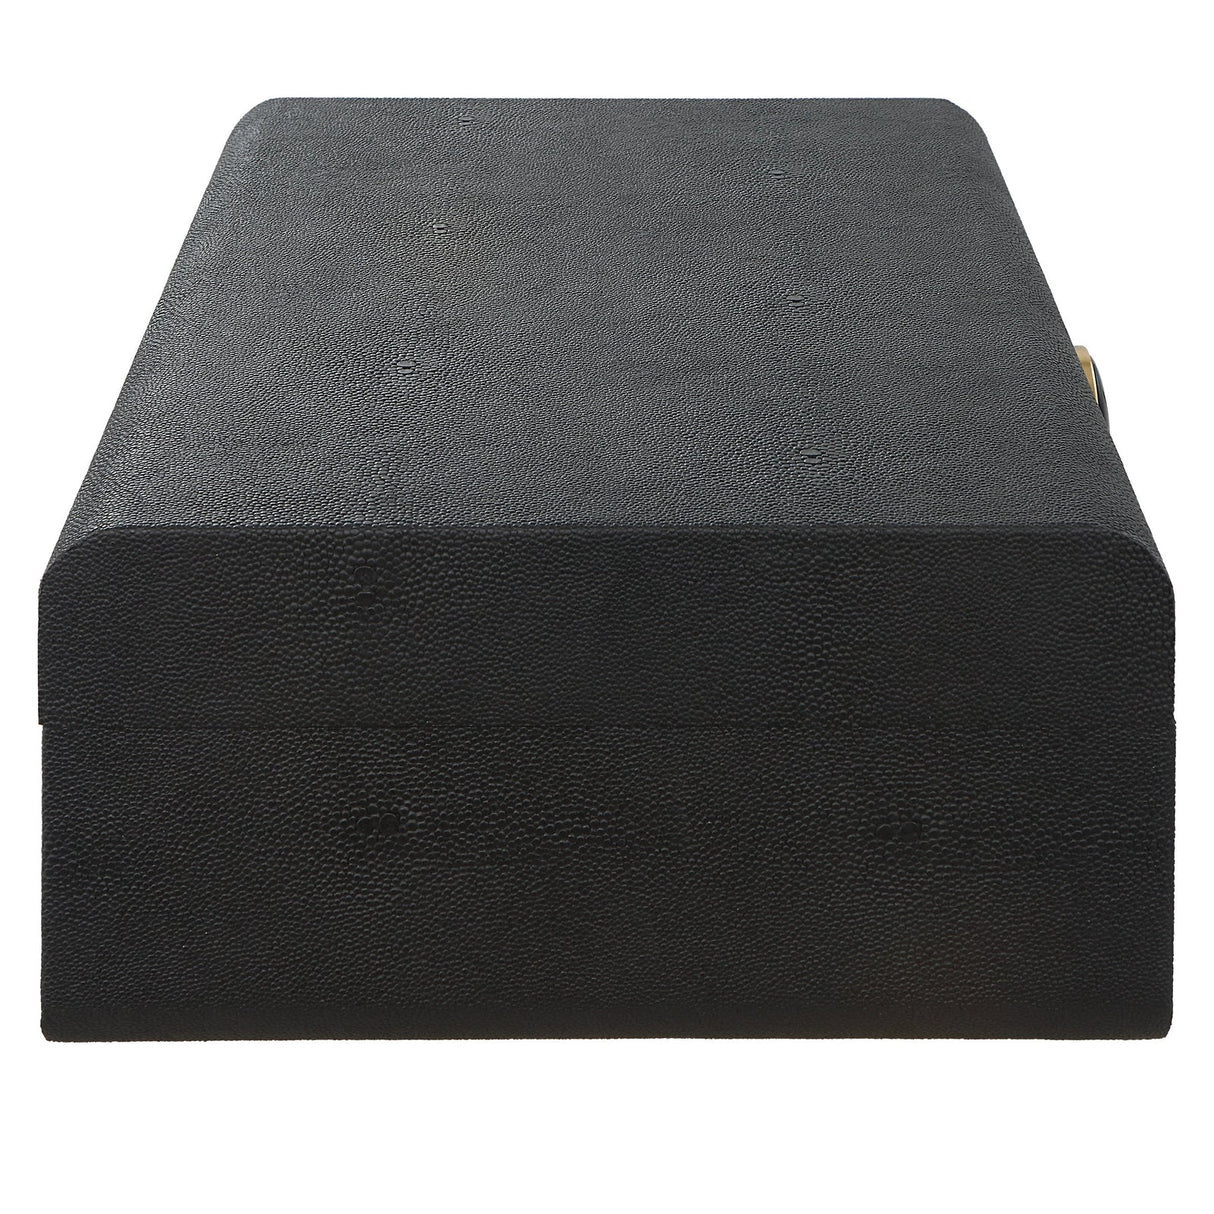 Uttermost Lalique Black Shagreen Box - Home Elegance USA